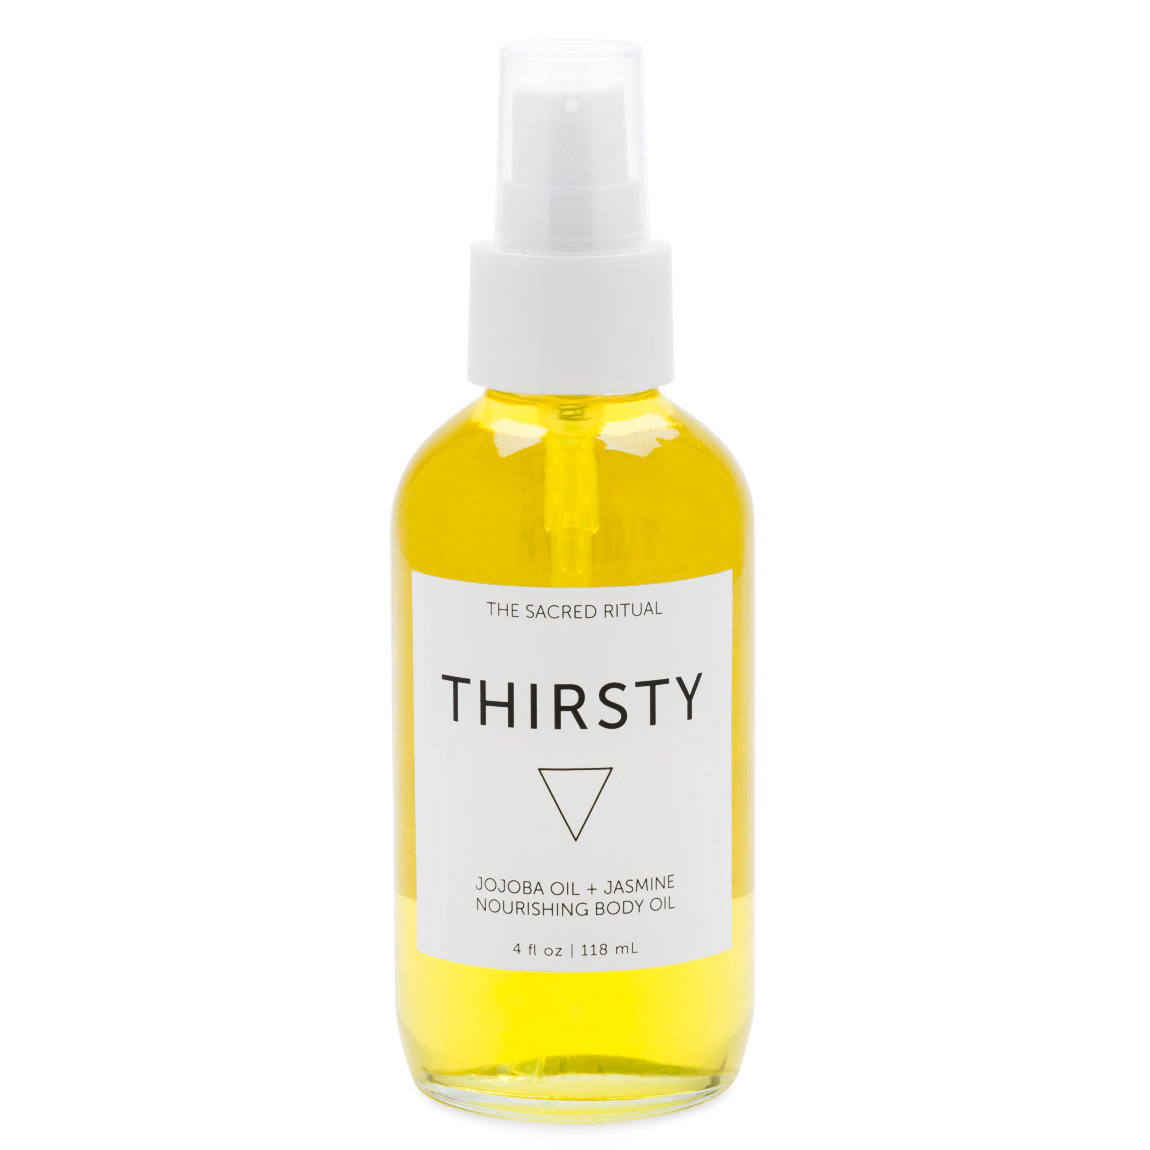 The Sacred Ritual Thirsty Jojoba Oil + Jasmine Nourishing Body Oil alternative view 1 - product swatch.